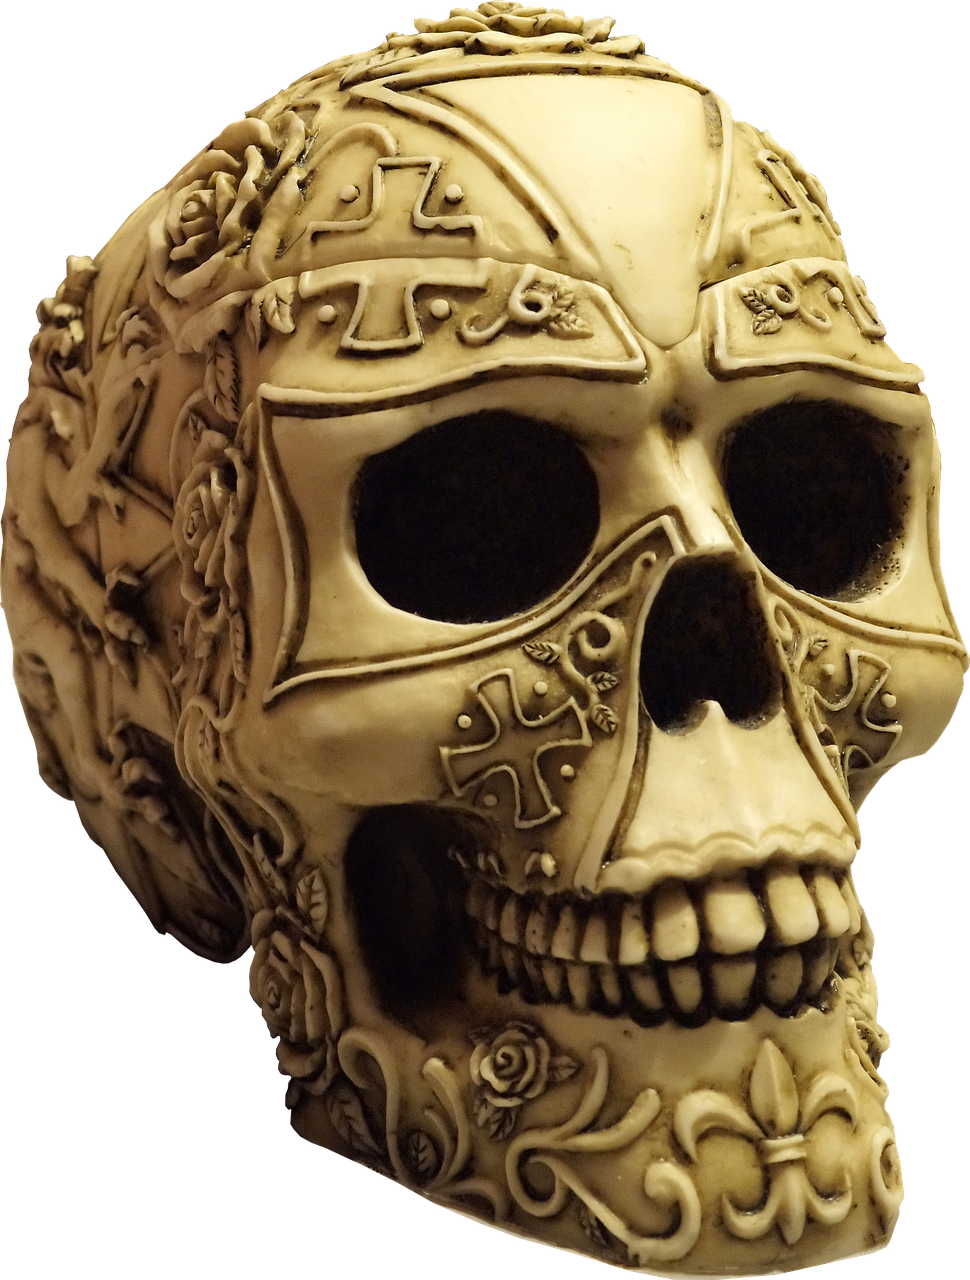 skull isolated skull and crossbones free photo